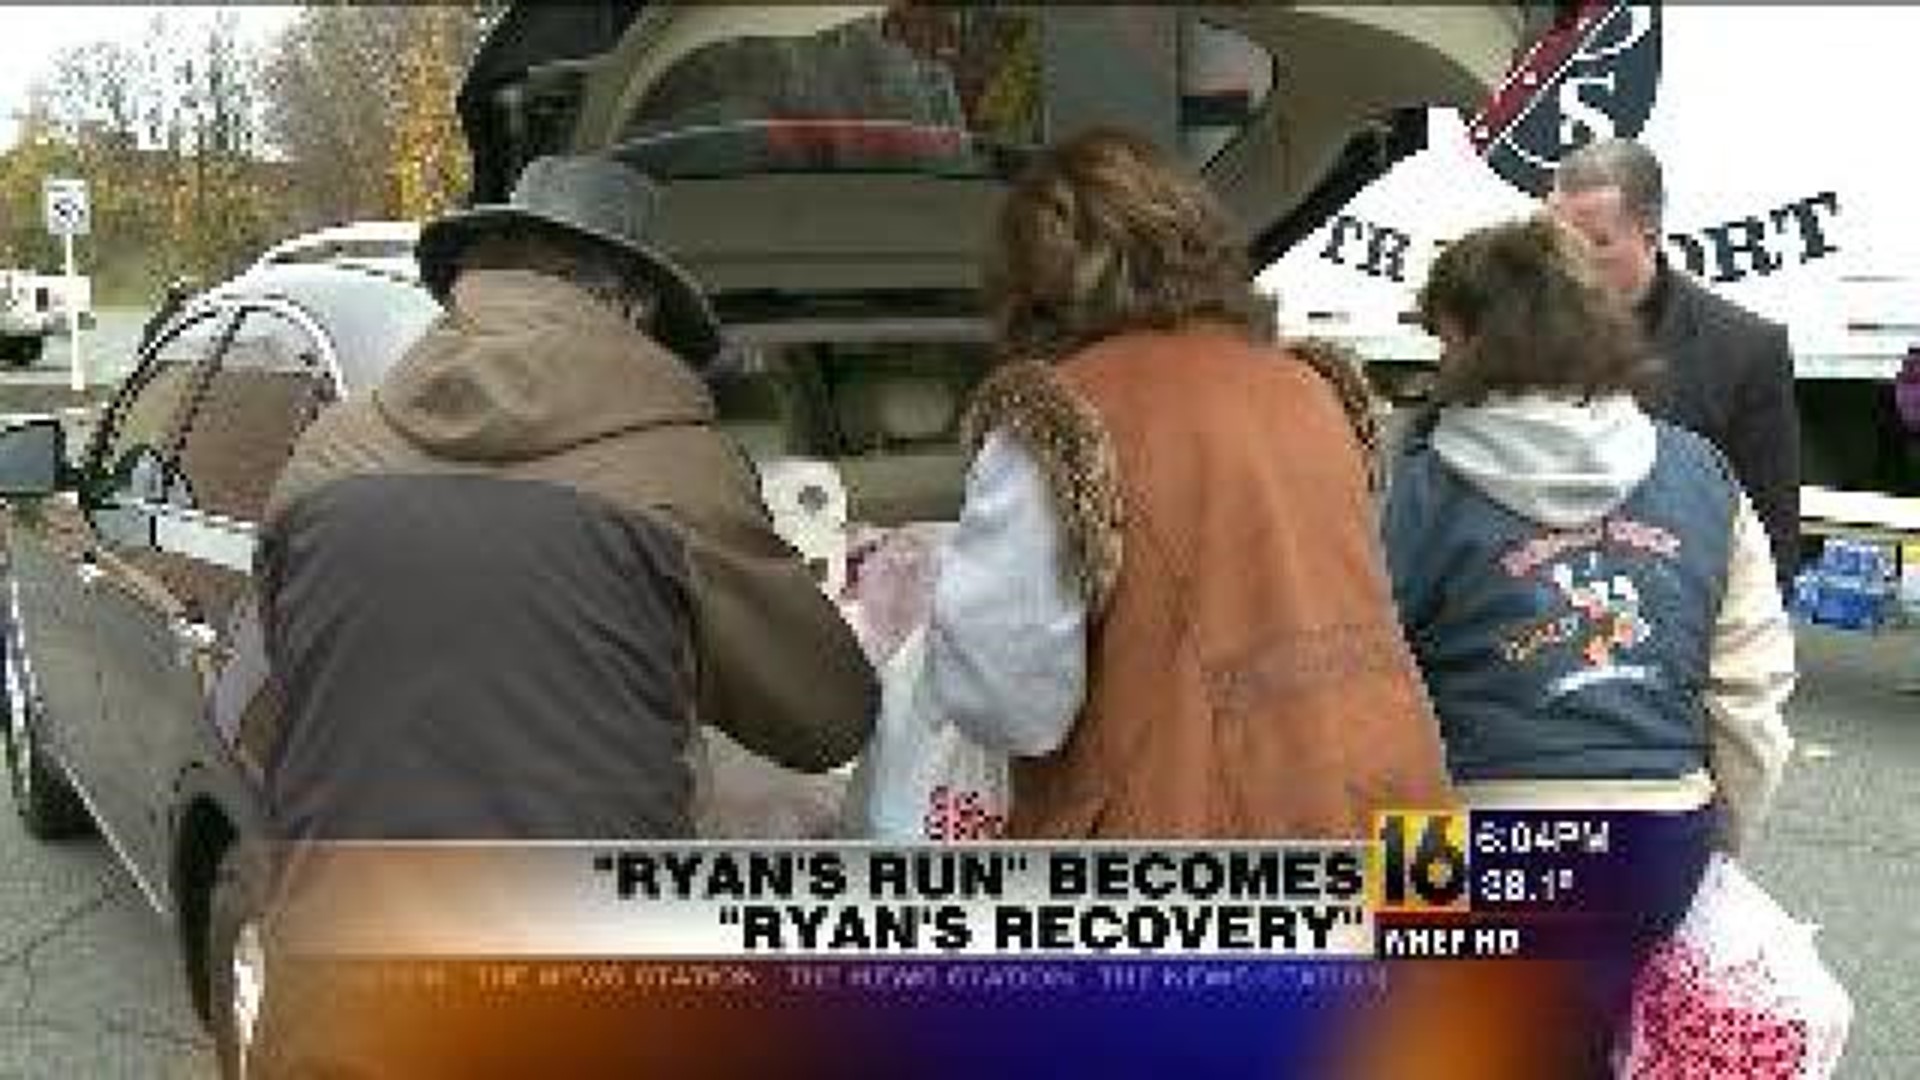 Ryan's Recovery